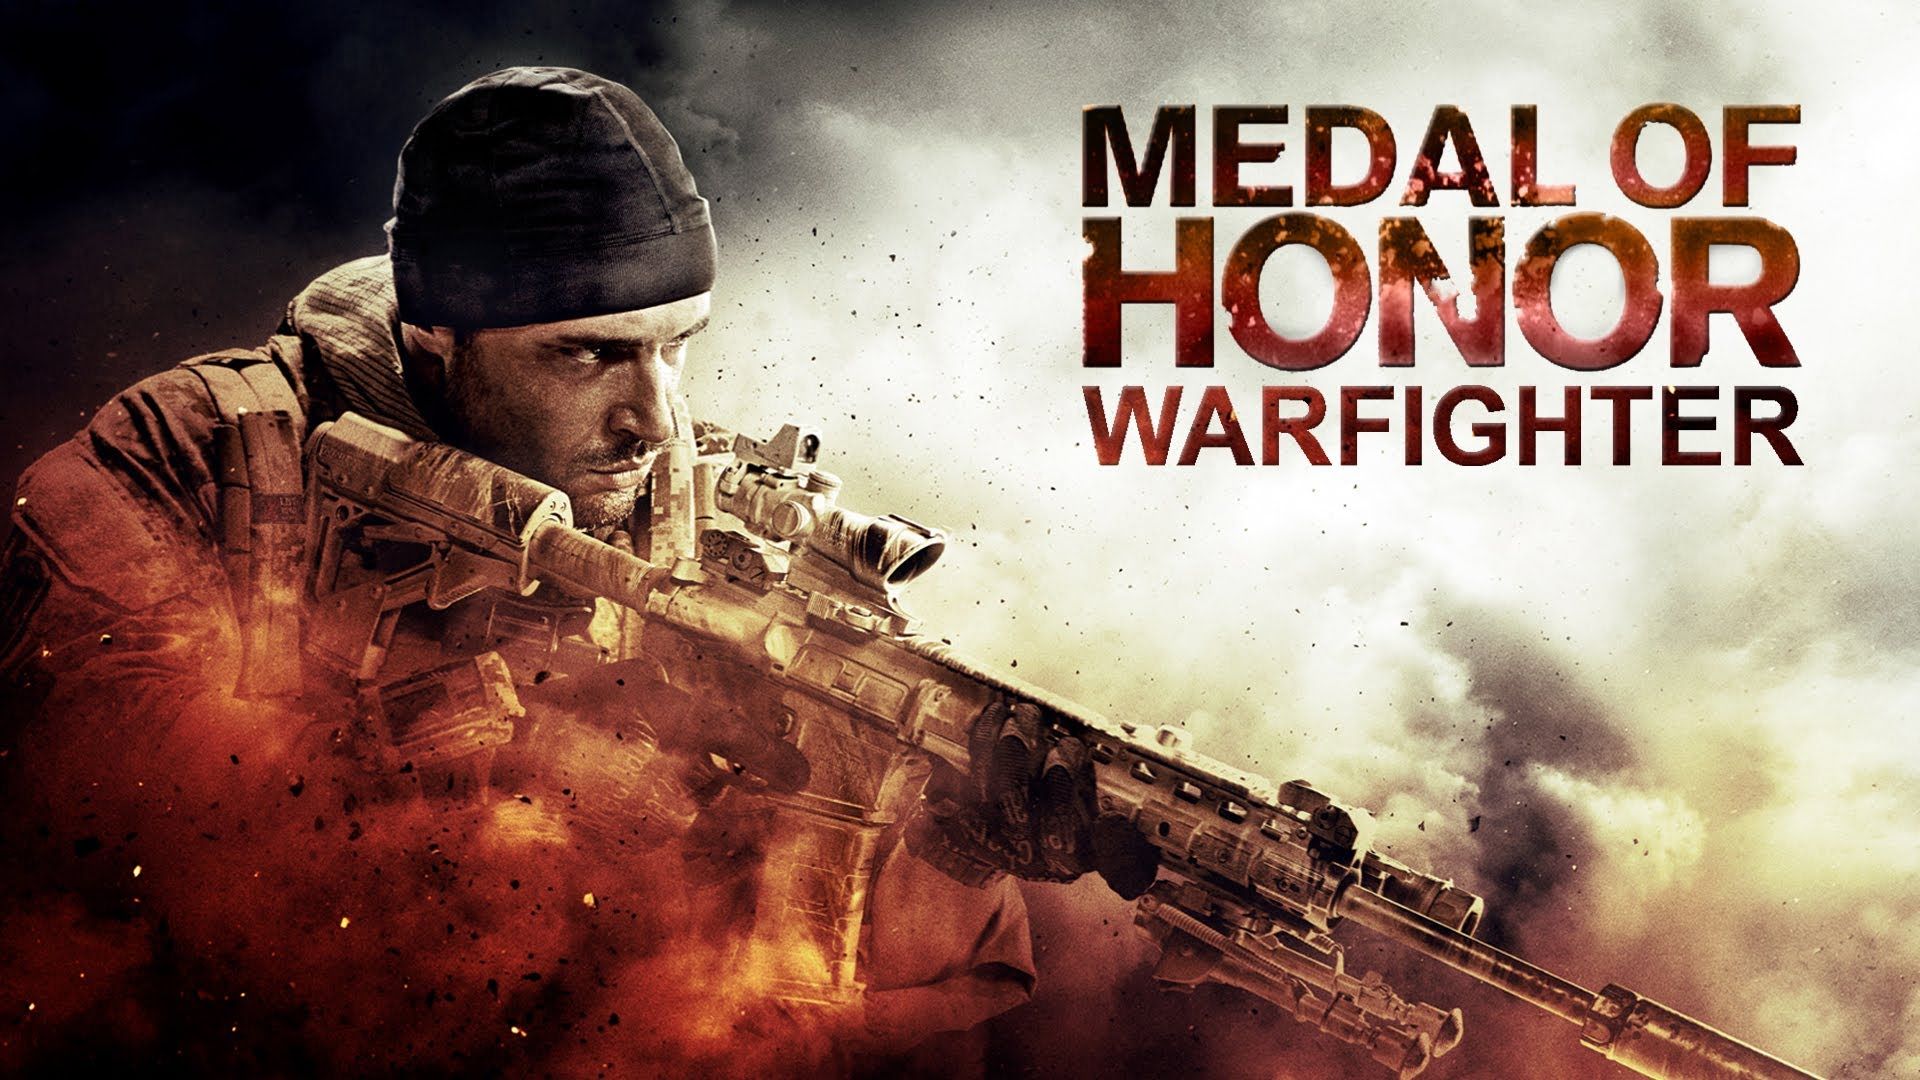 Medal Of Honor - Warfighter (2012 Soundtrack OST) - 11. Force Multiplier